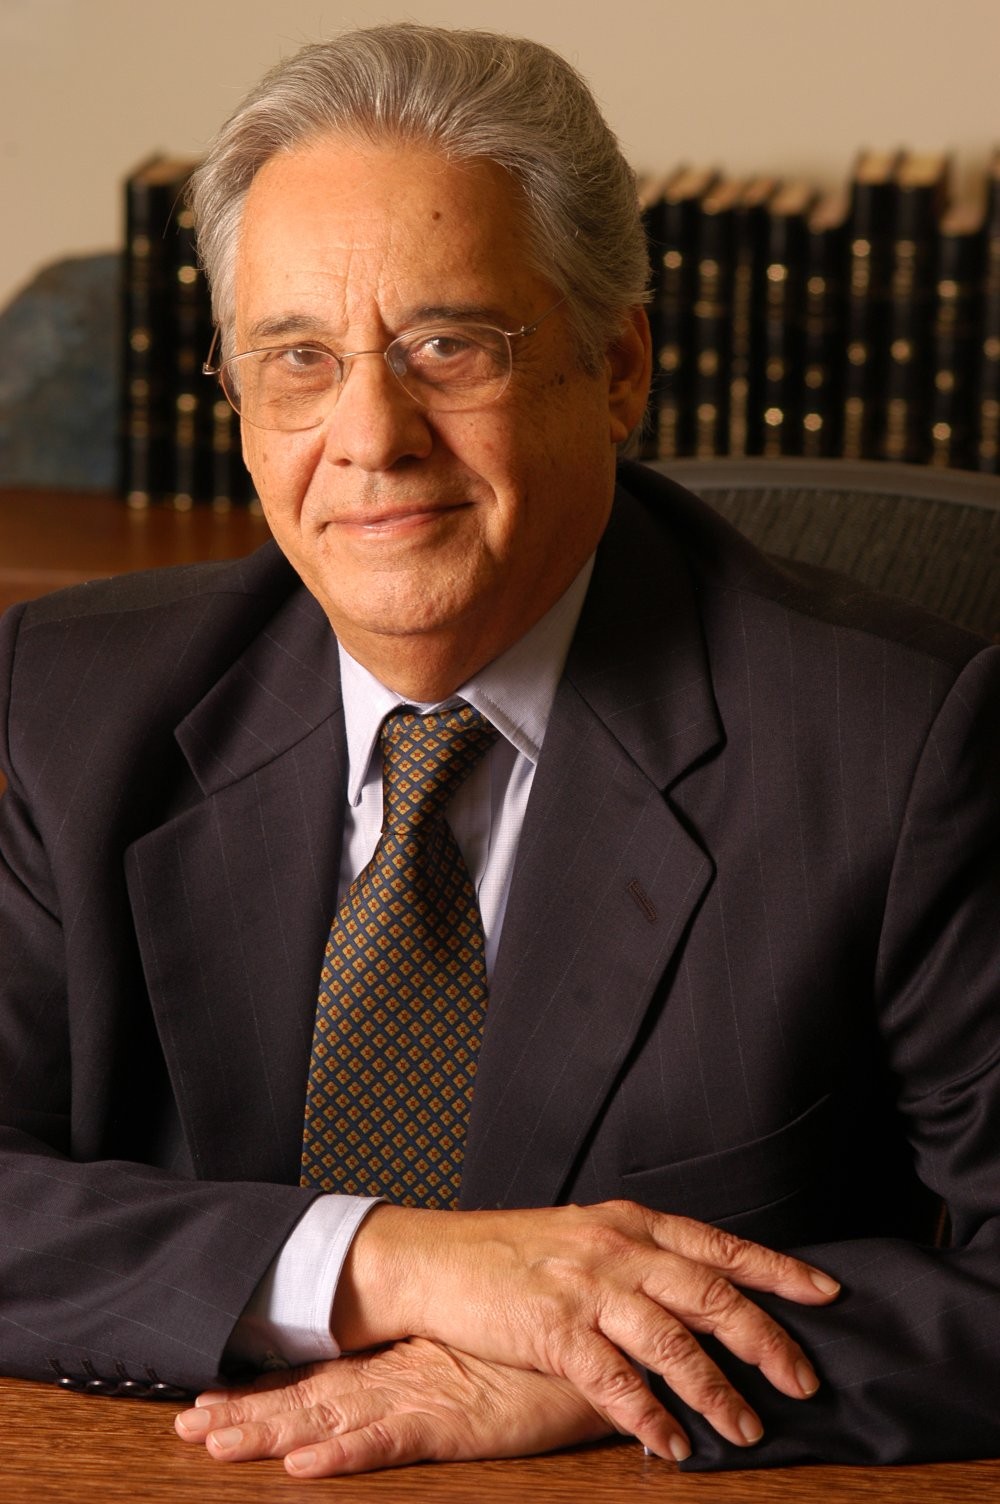 Brazil's former President Fernando Henrique Cardoso